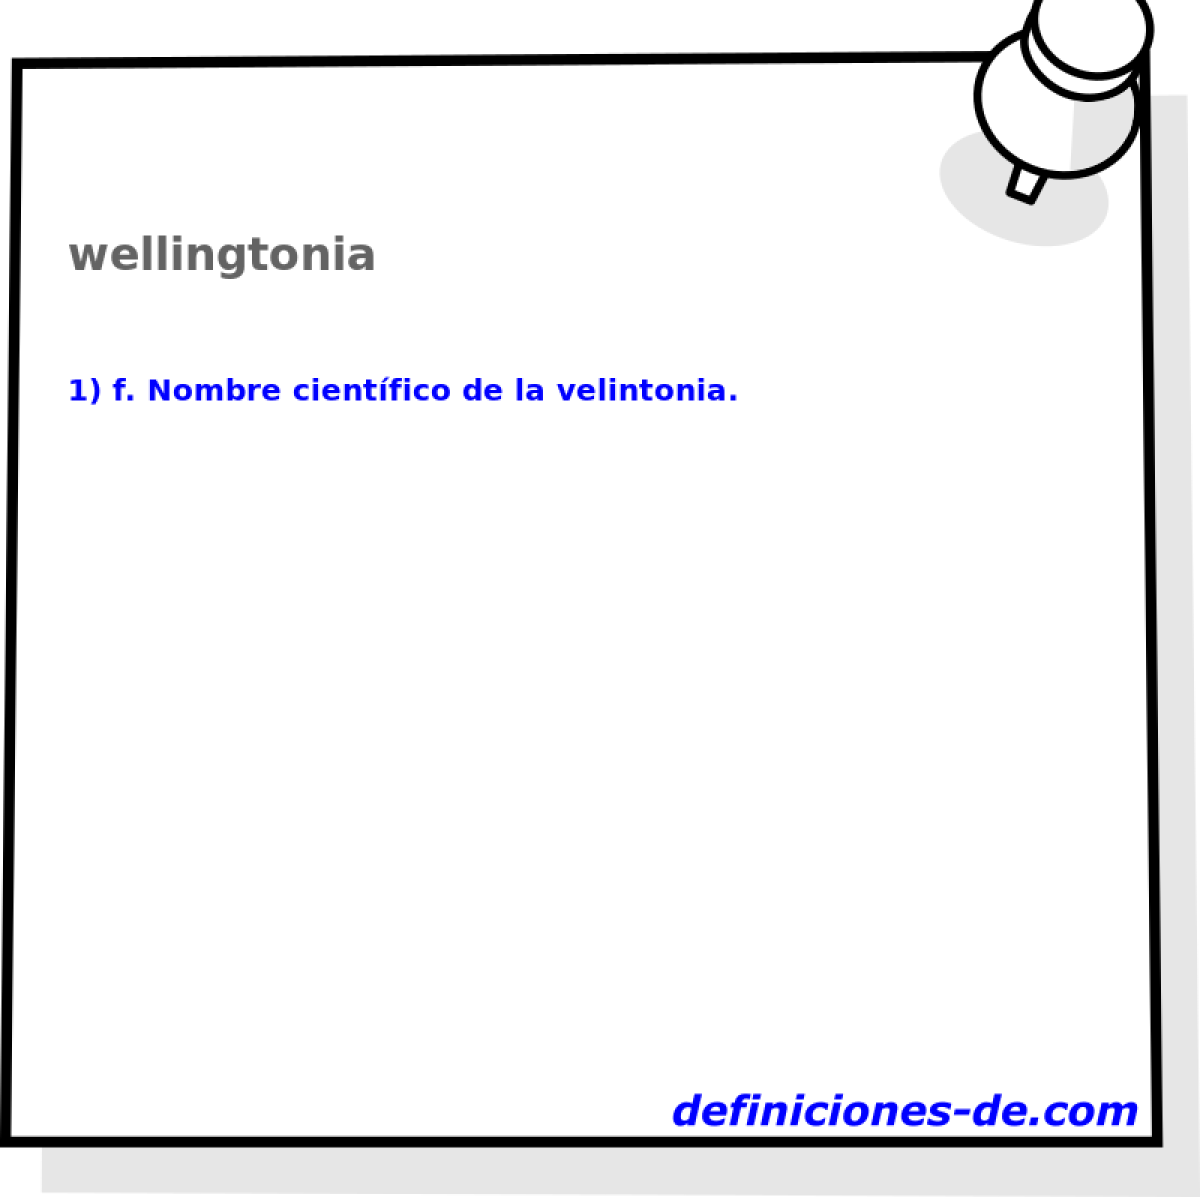 wellingtonia 